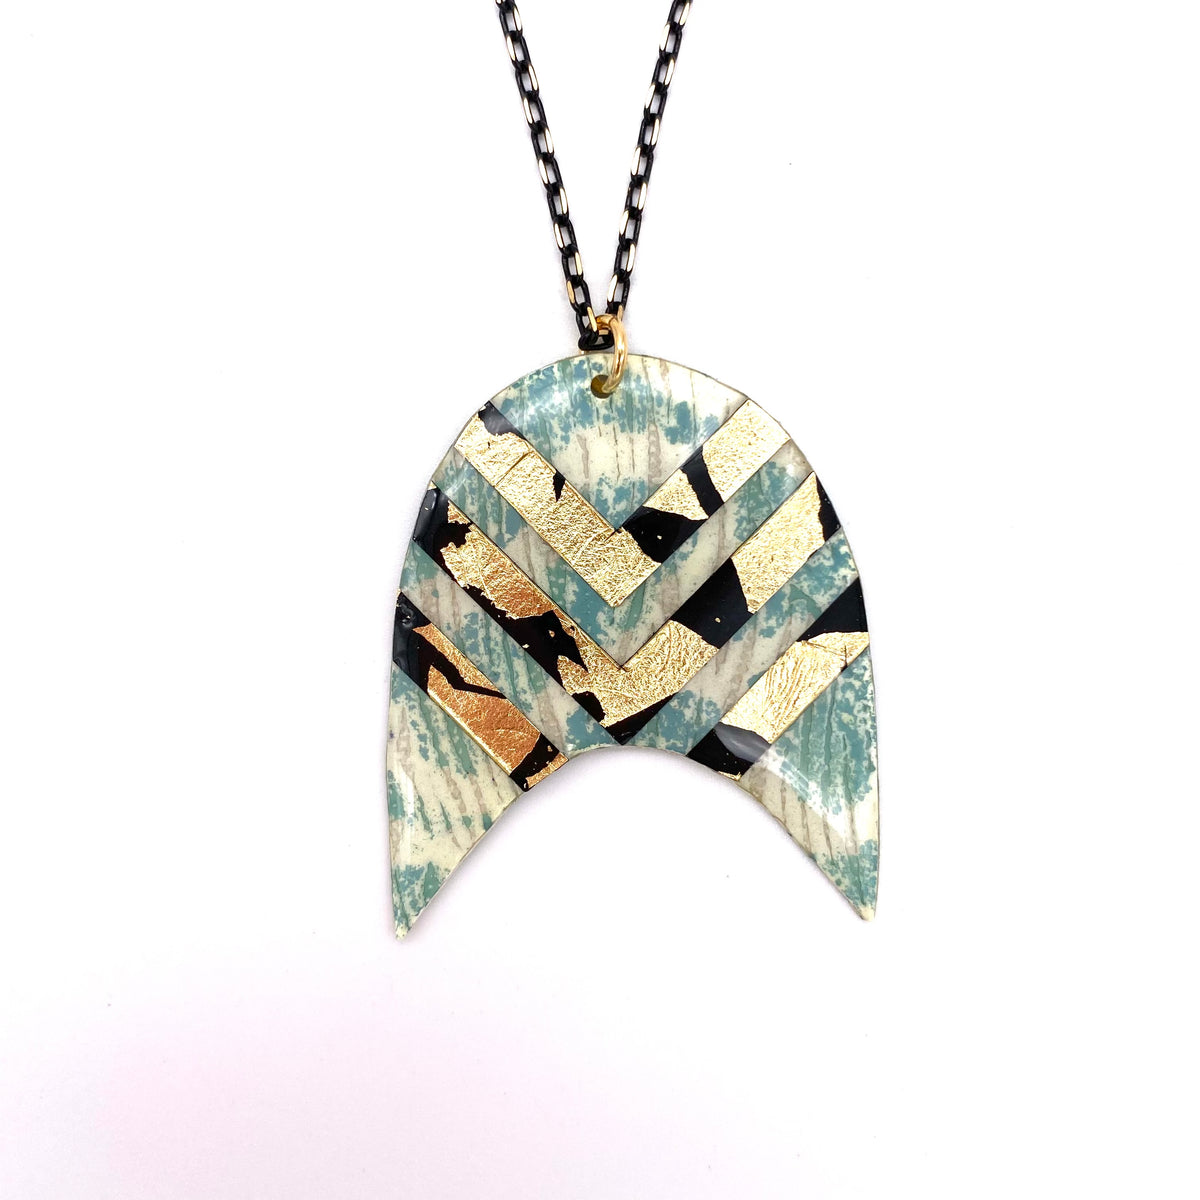 Bly batik textile necklace in flint-blue with gold/black chevrons